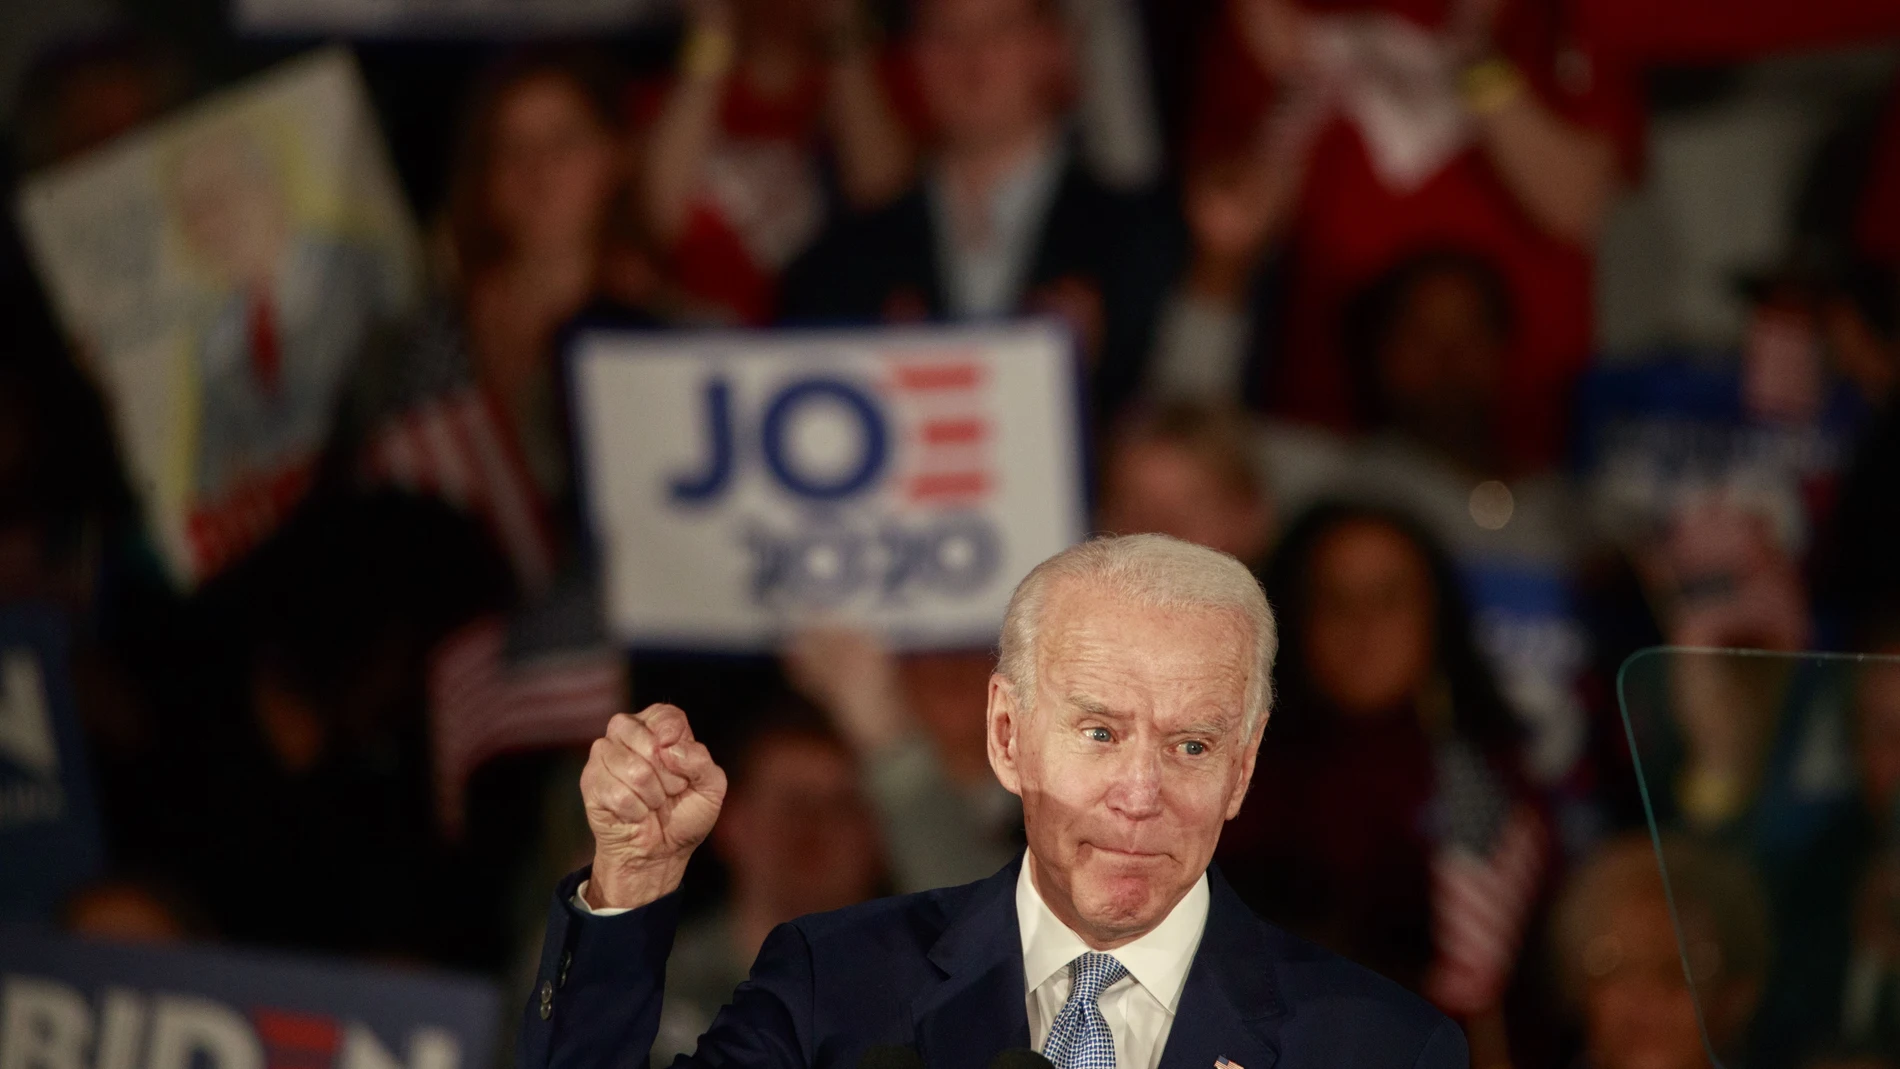 Joe Biden, candidato demócrata a la Casa Blanca. (Jeremy Hogan)01/03/2020 ONLY FOR USE IN SPAIN